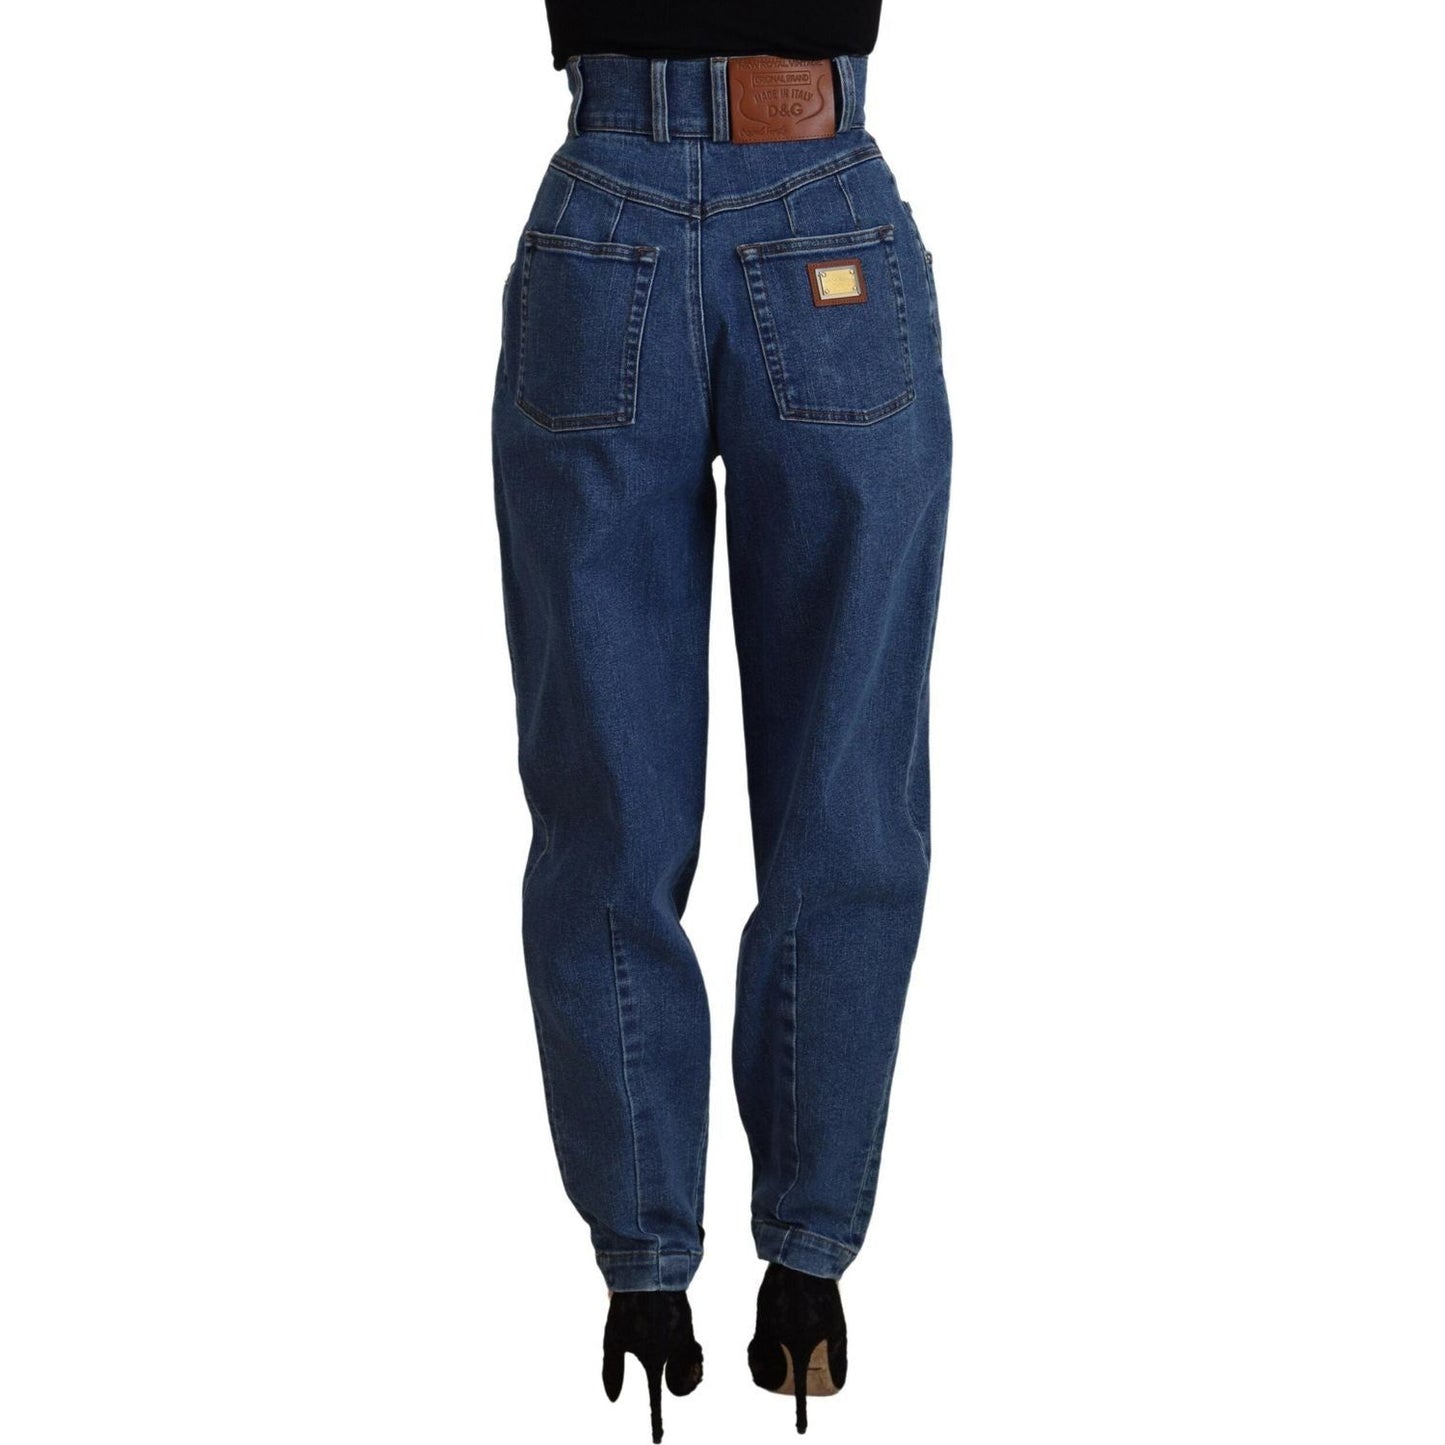 Dolce & Gabbana Elegant High Waist Blue Jeans blue-high-waist-denim-cotton-stretch-jeans